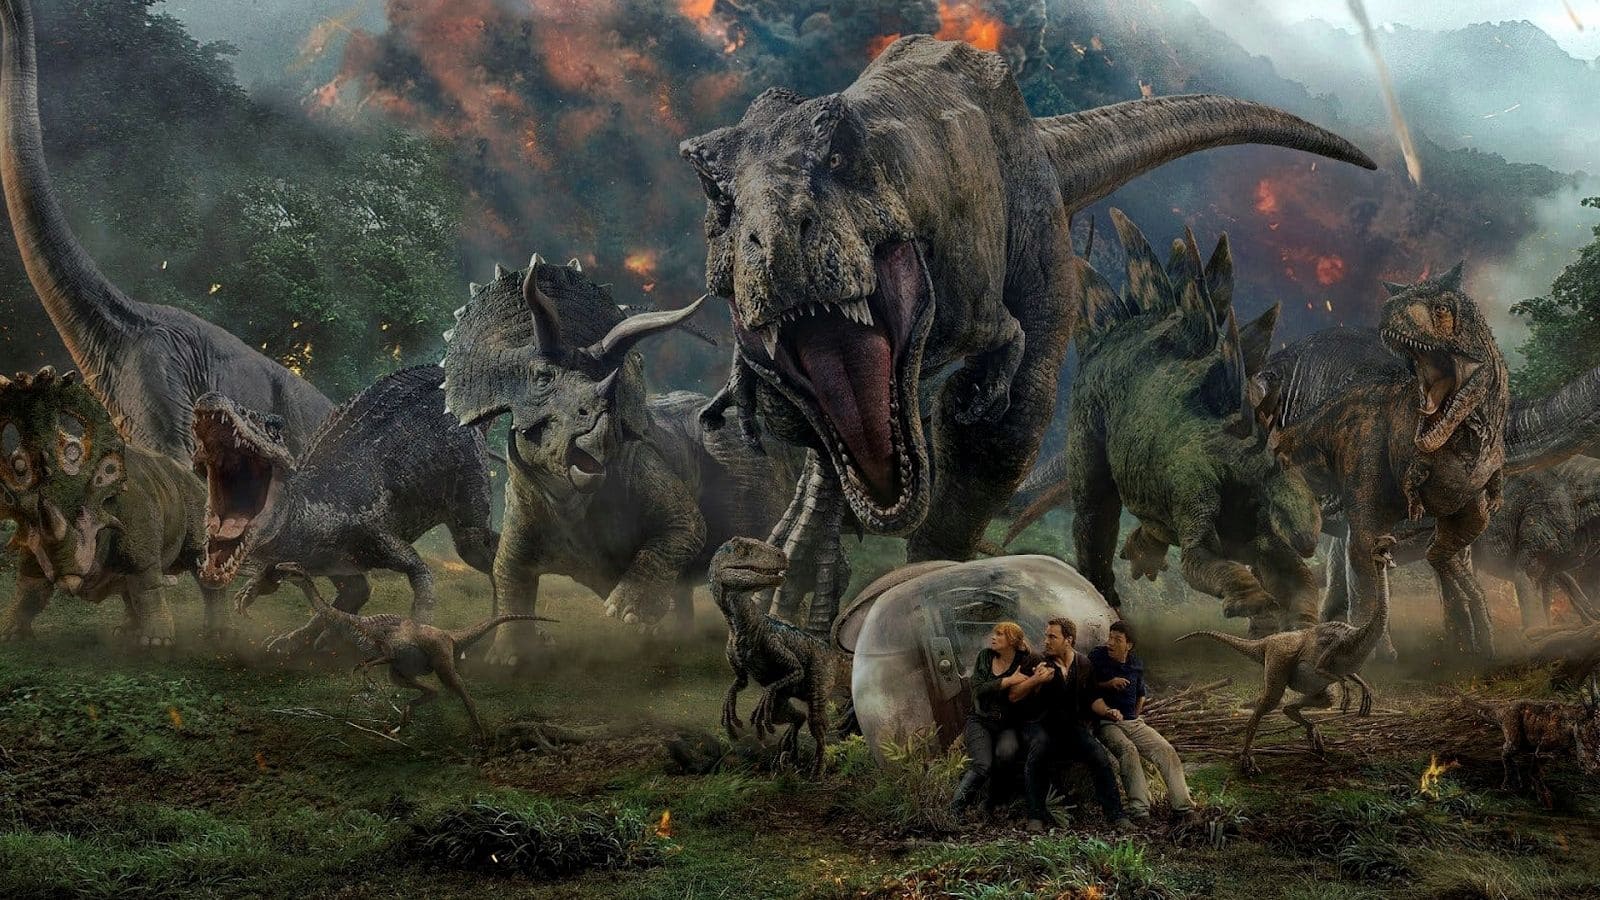 Image du film Jurassic World : Fallen Kingdom fisfcc4b8bqvig5pz54oqzmh6bwjpg